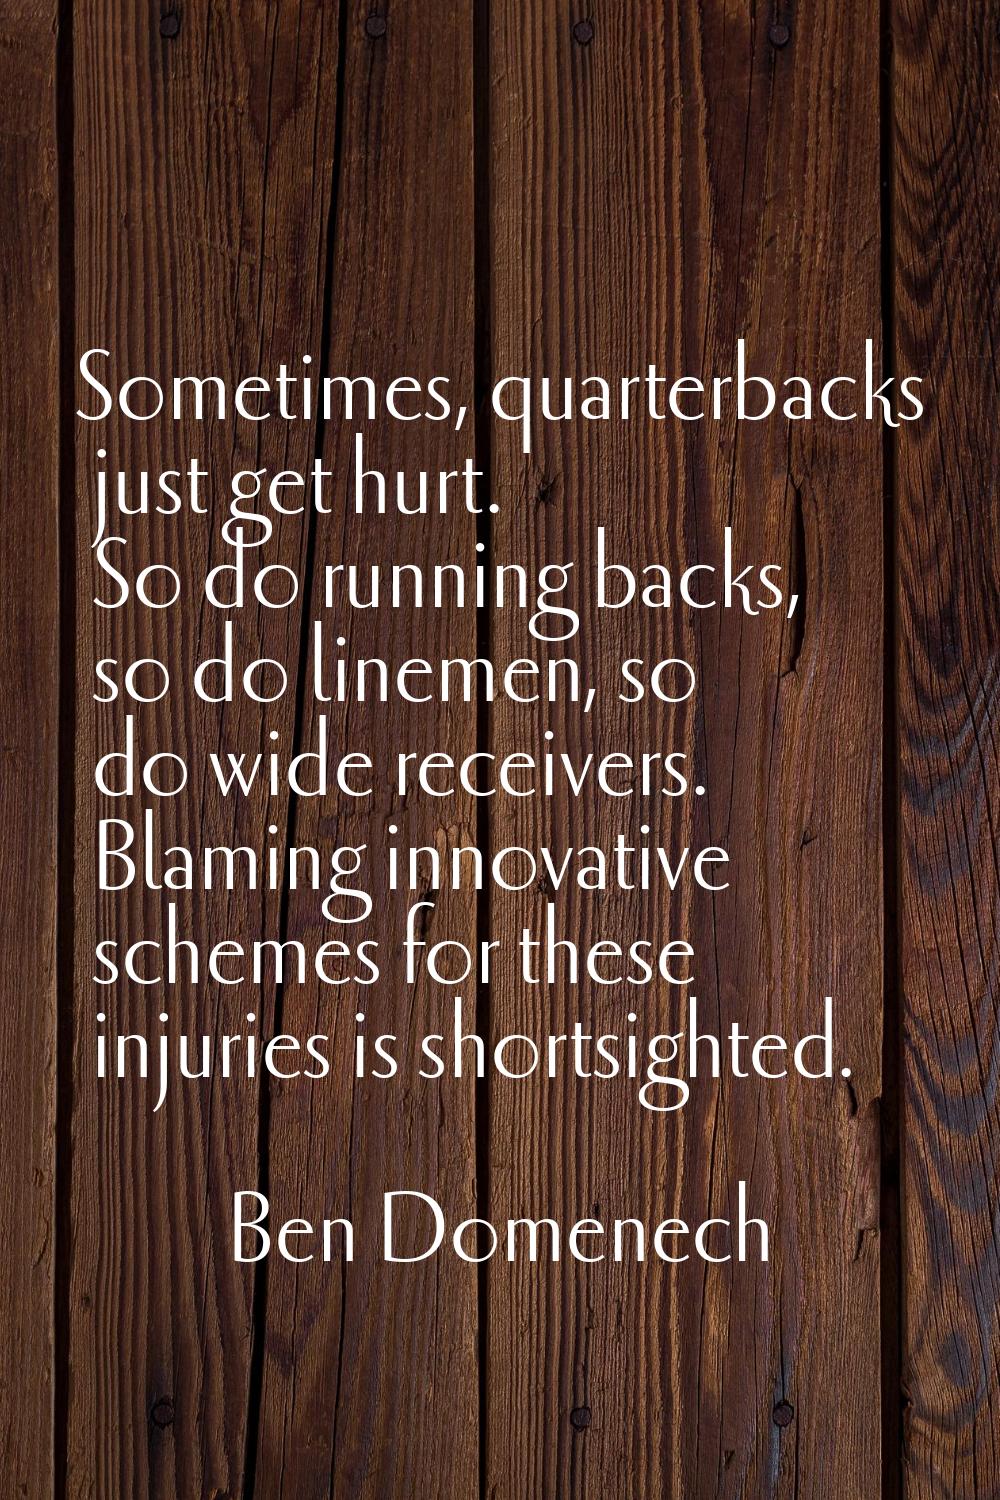 Sometimes, quarterbacks just get hurt. So do running backs, so do linemen, so do wide receivers. Bl